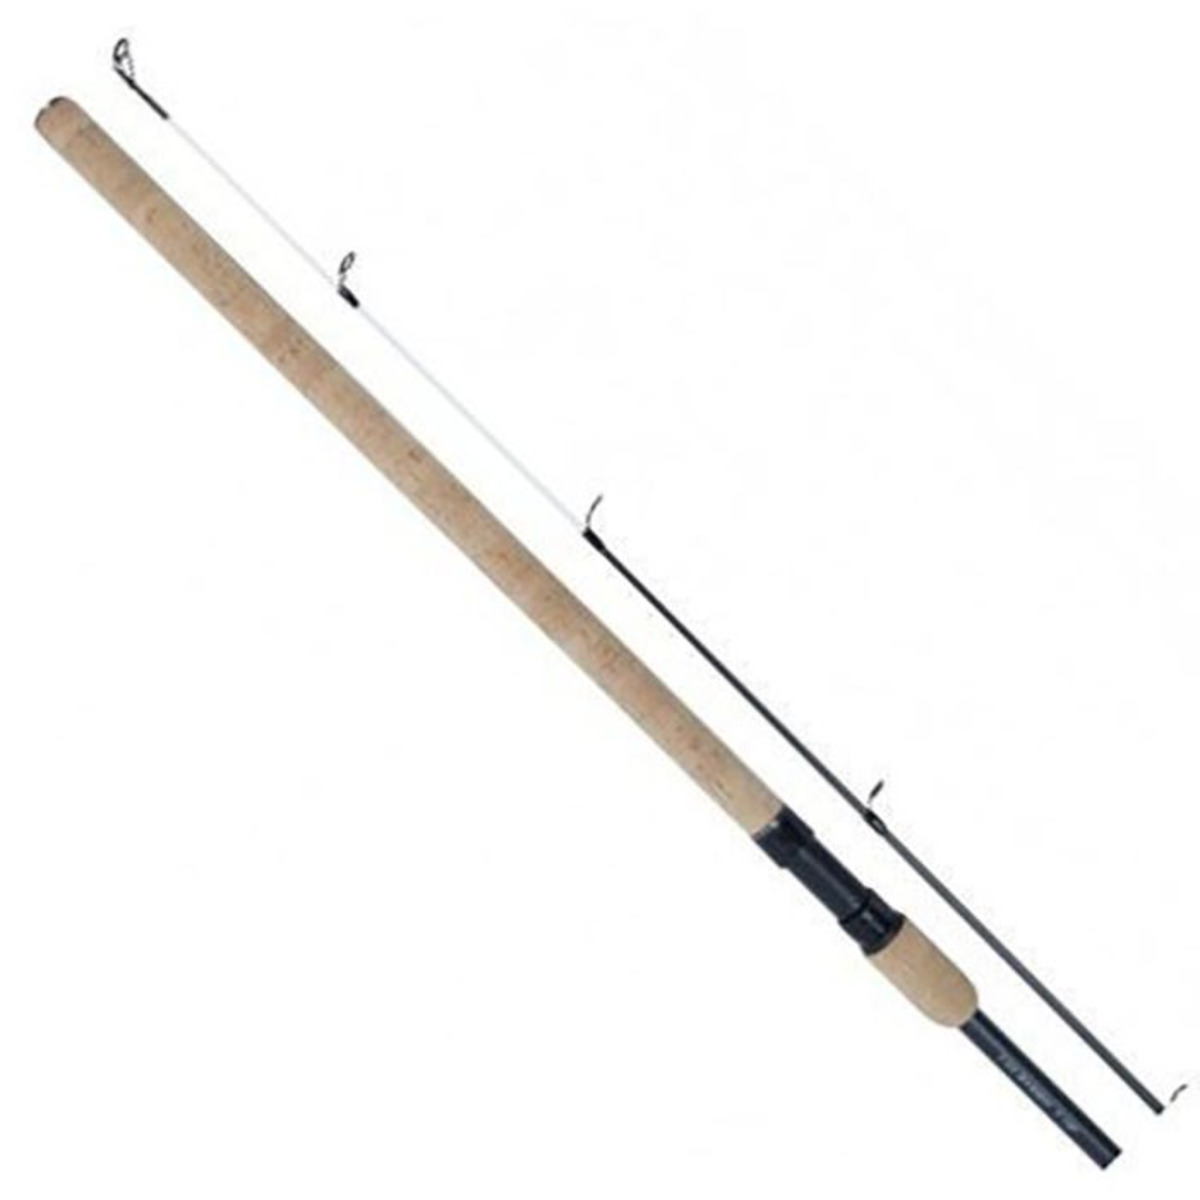 Korum Barbel Rod 13´ Two Piece 2.5 lb